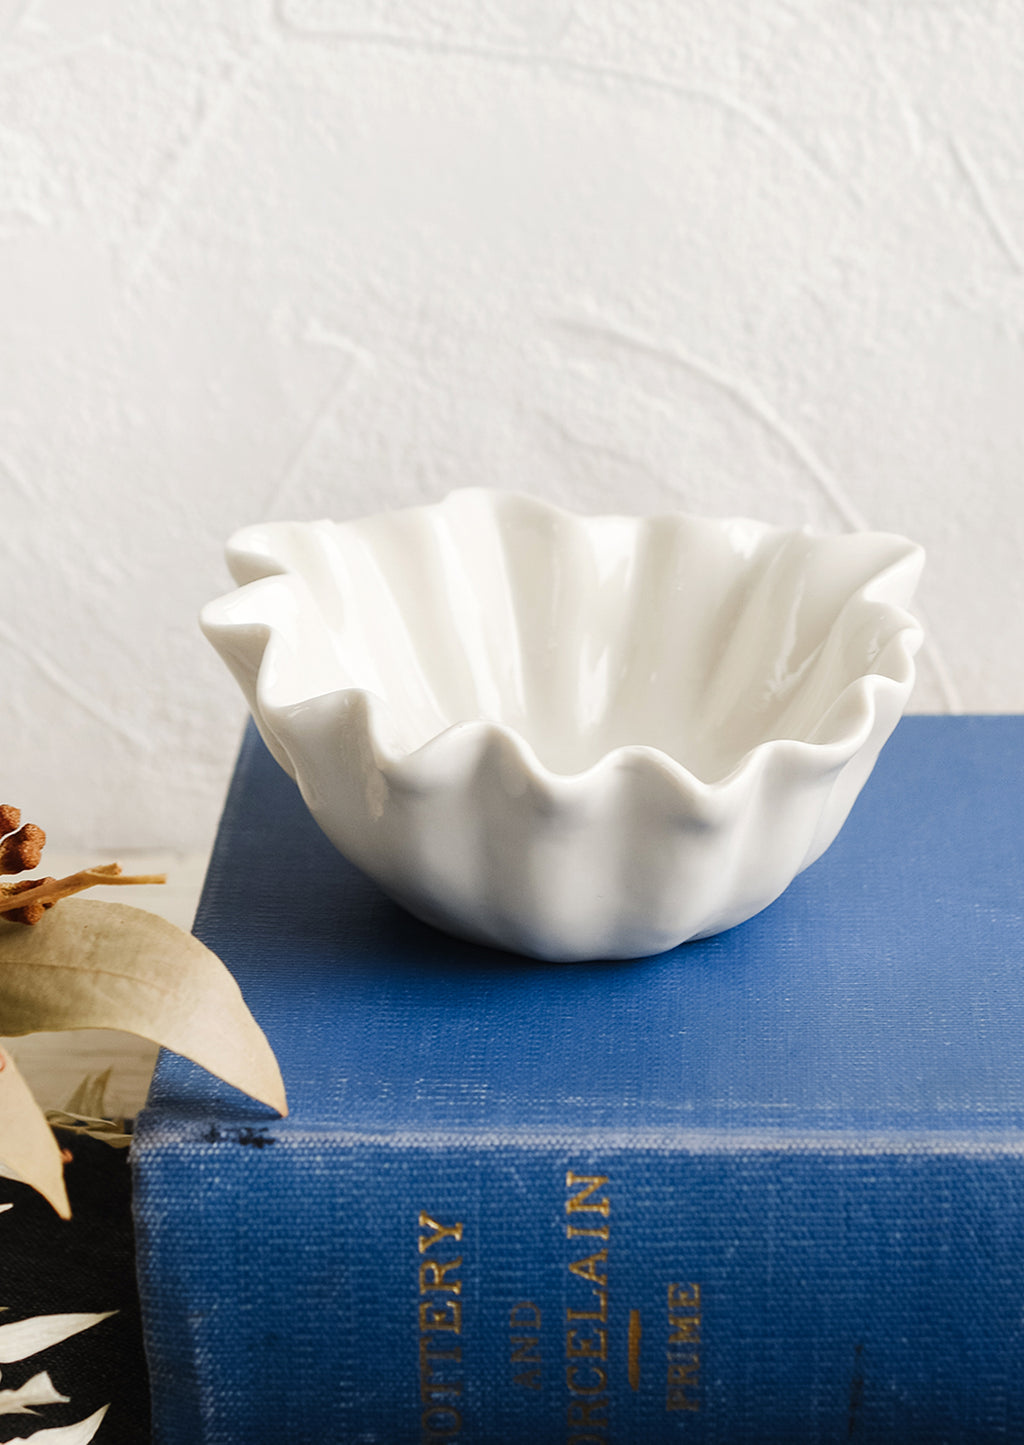 Small: A white bowl with wavy shell-like shape.